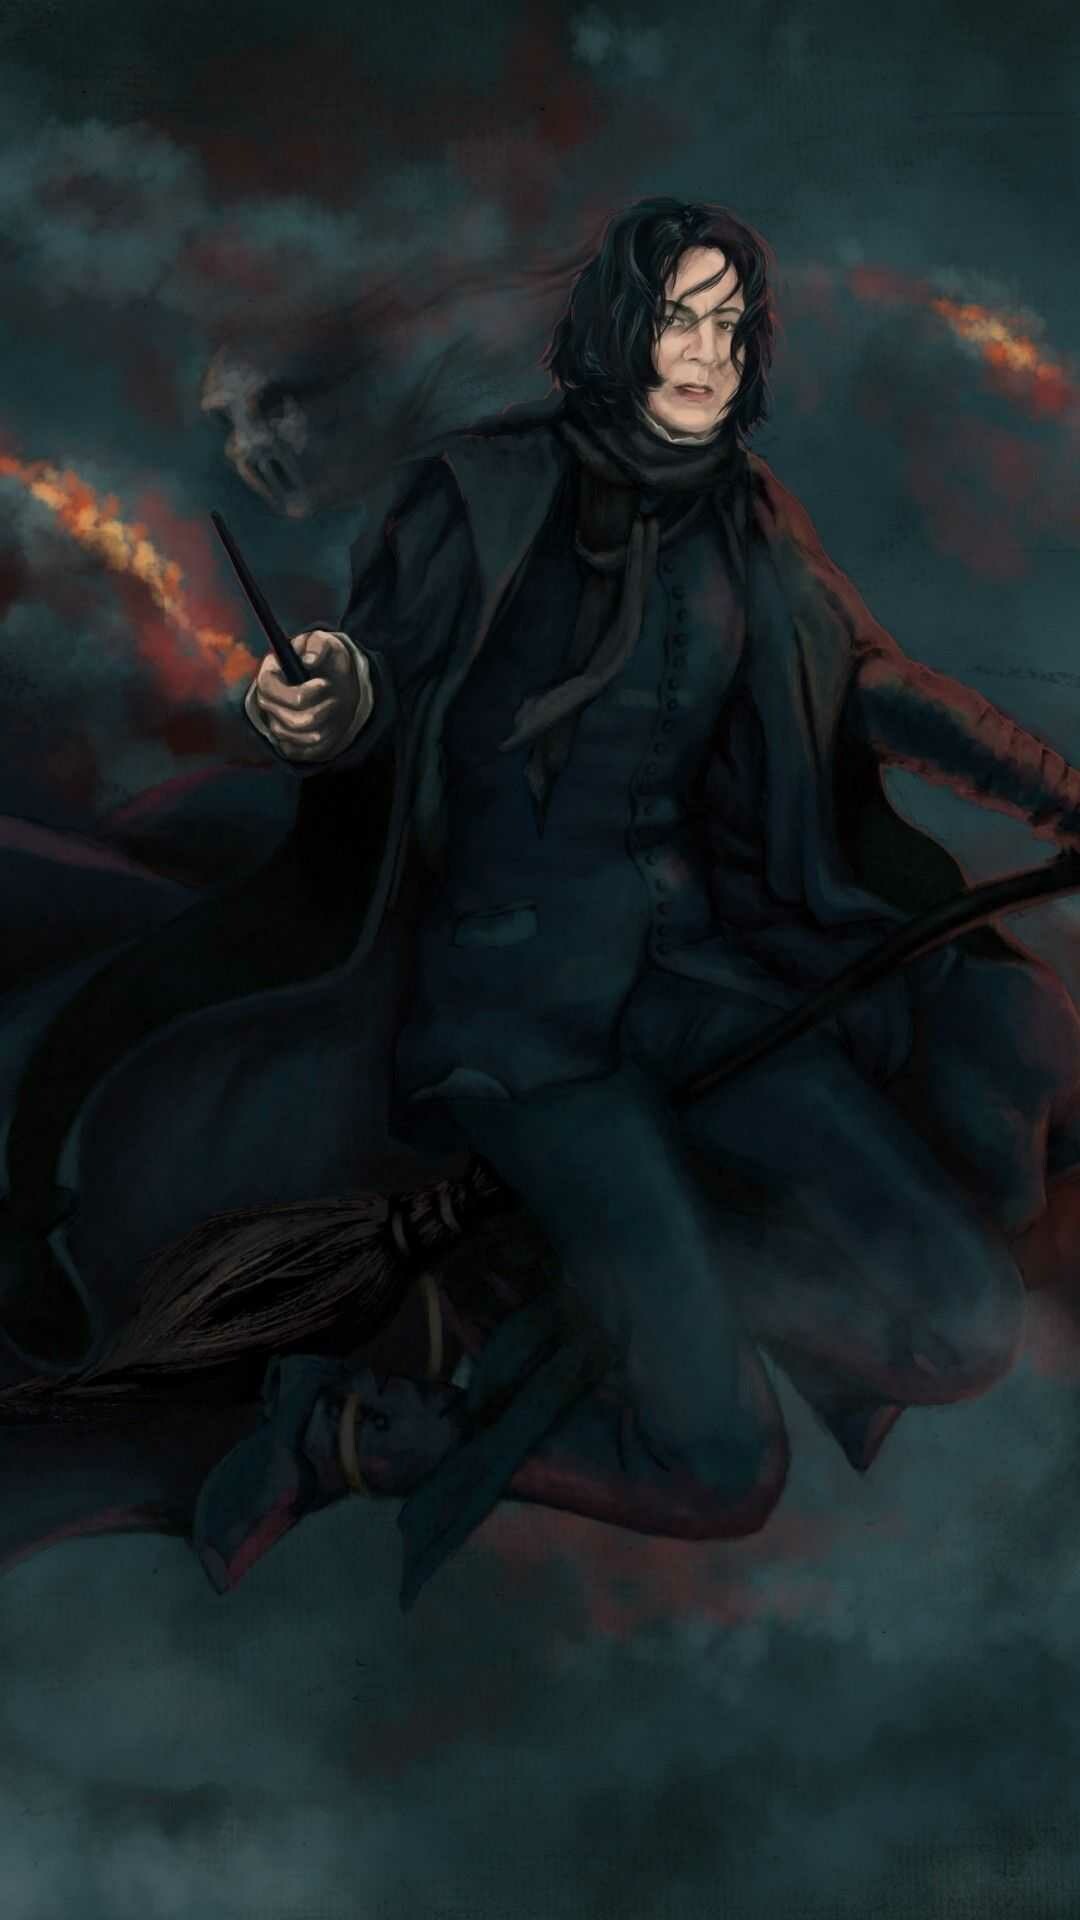 Harry Potter: Professor Severus Snape, Known as The Half-Blood Prince. 1080x1920 Full HD Wallpaper.